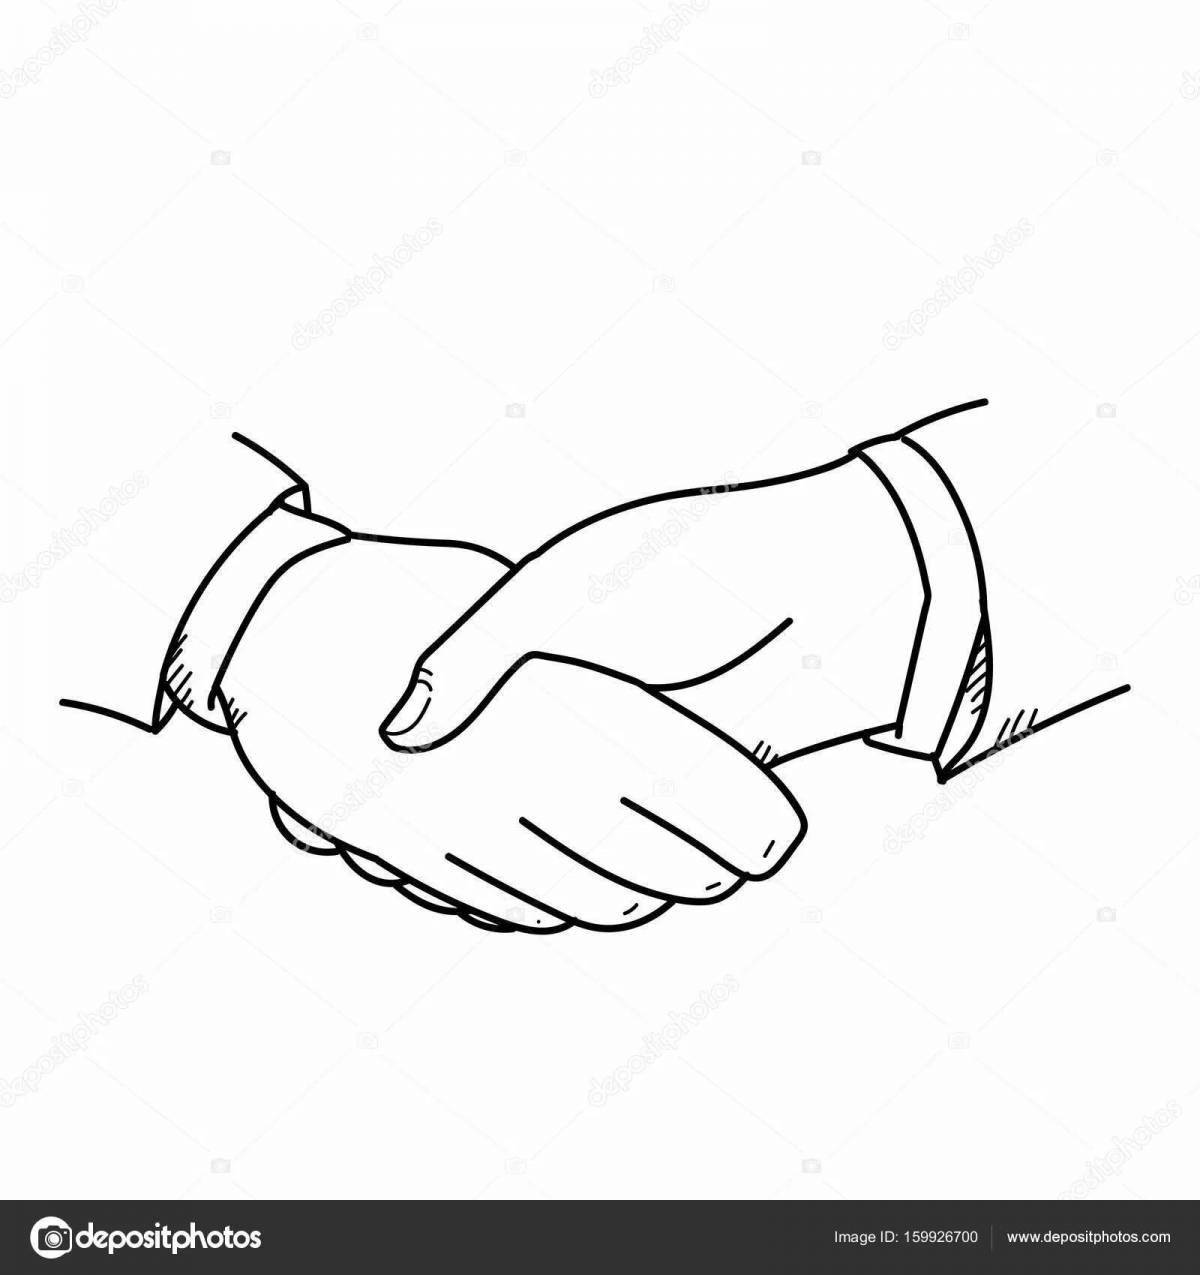 Happy handshake coloring page